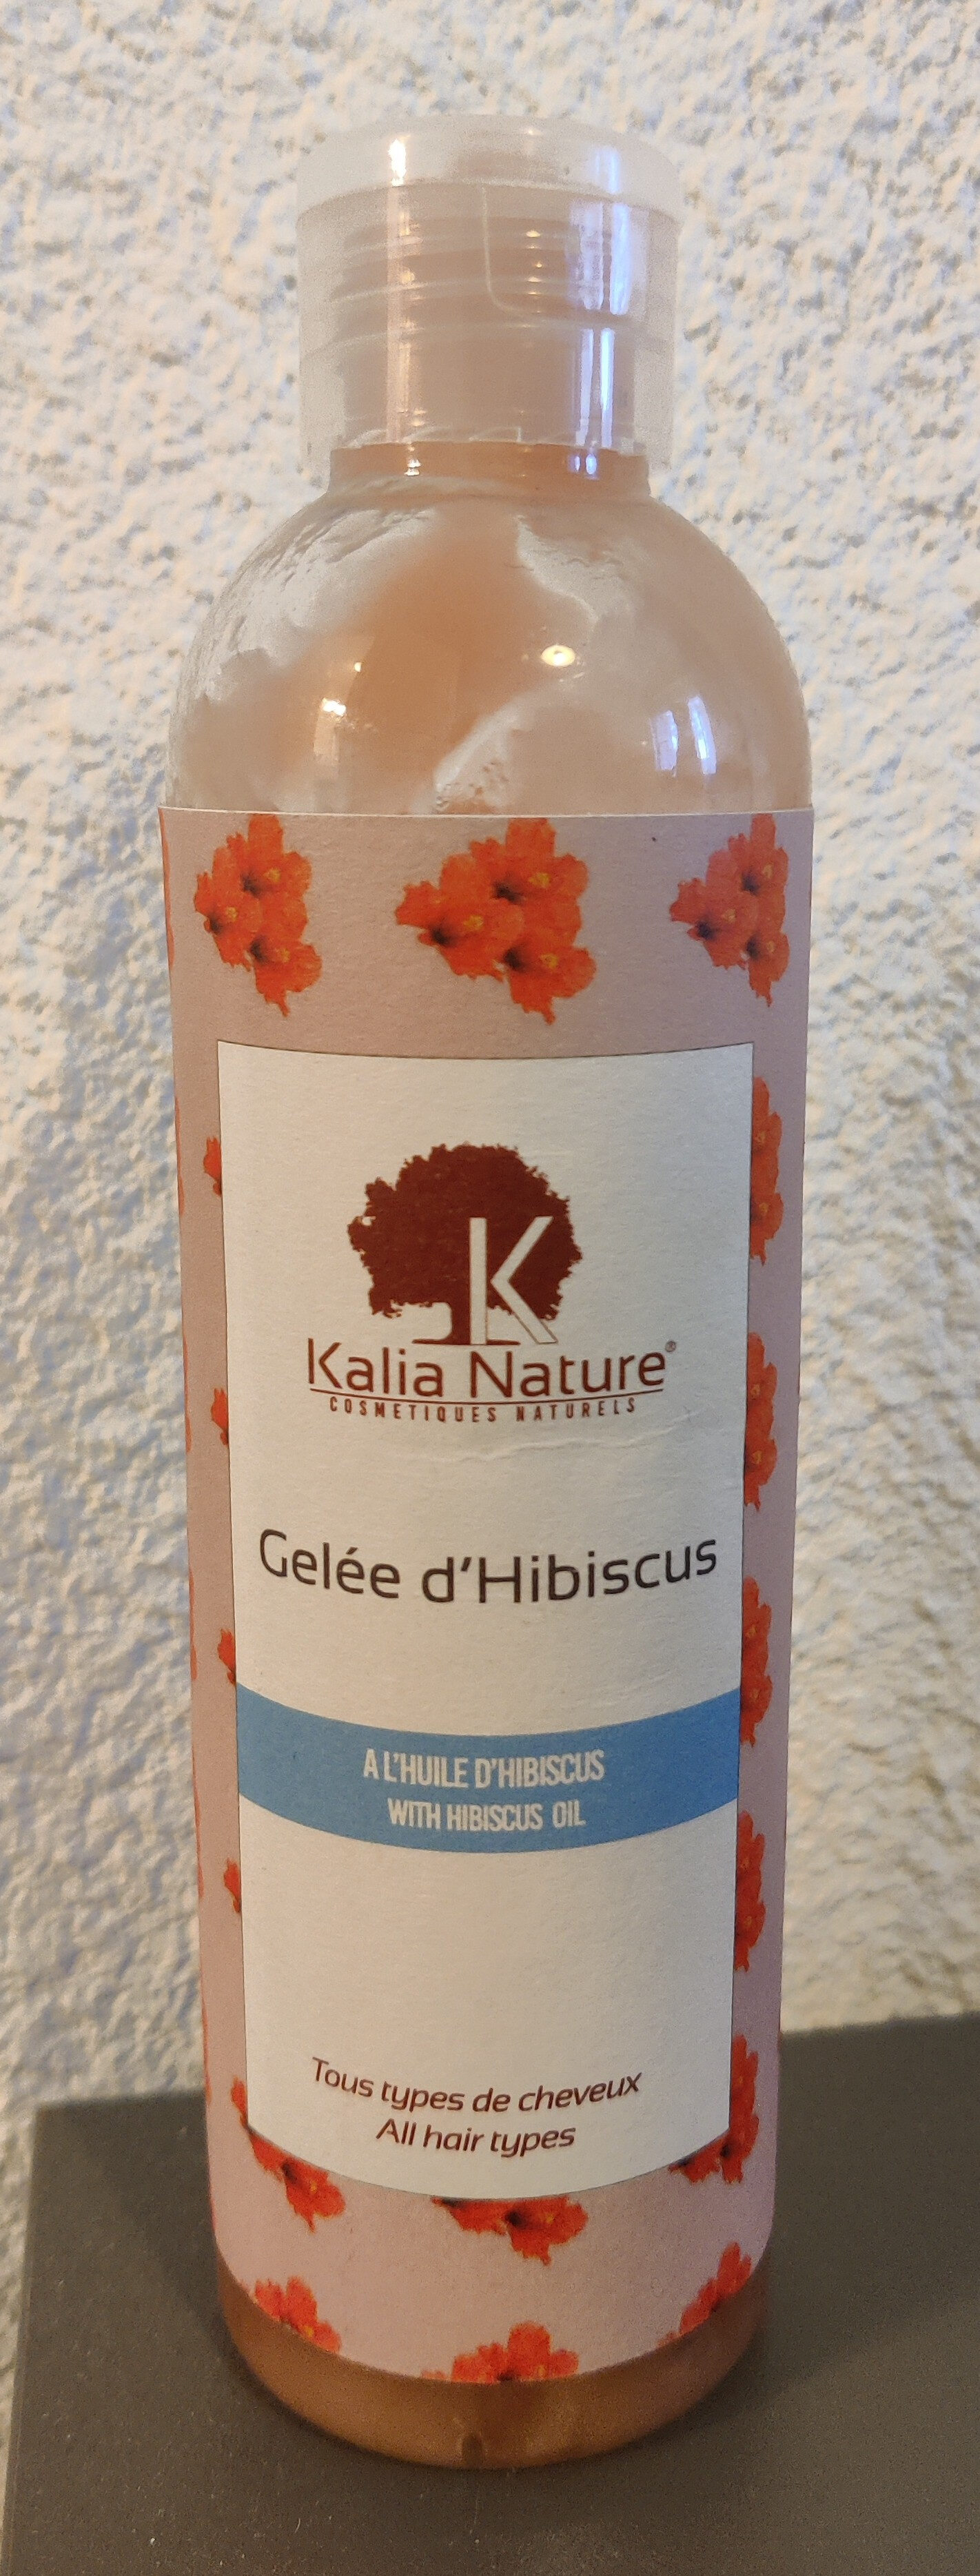 Gelée d'Hibiscus - 製品 - fr